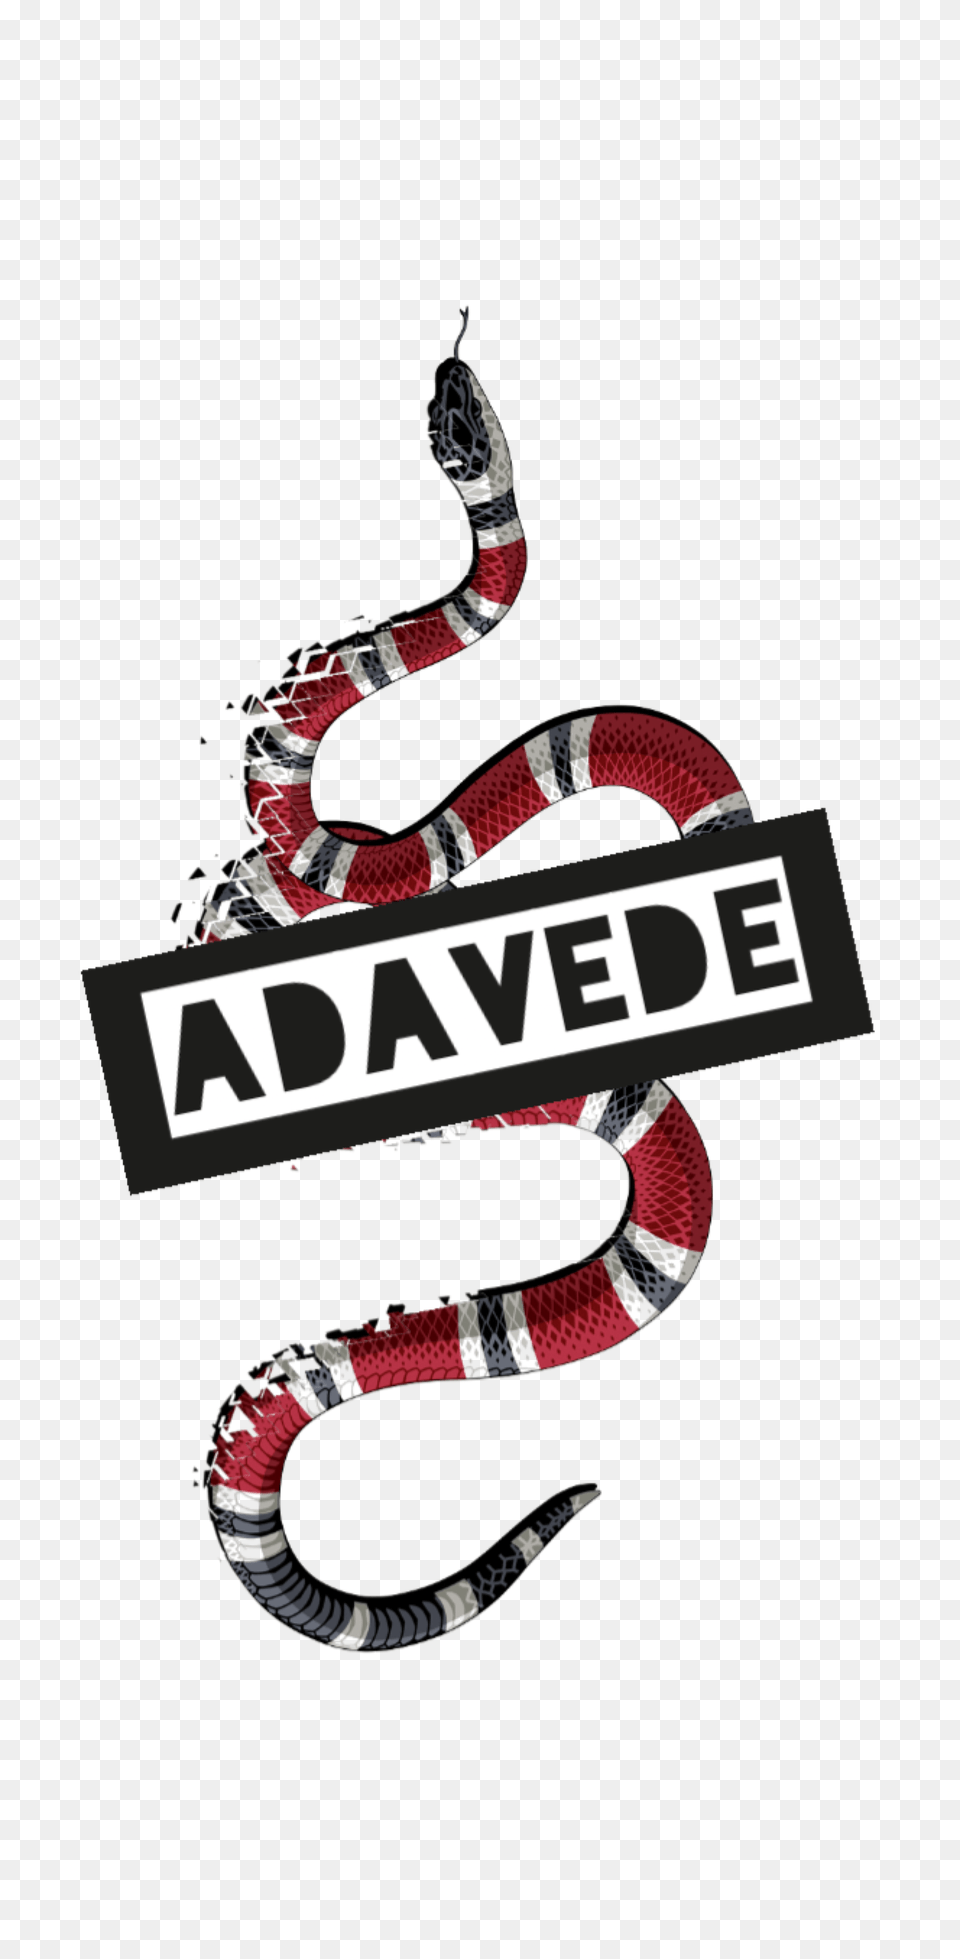 Adavede Gucci Snake Creata Da Stampa La Cover, Animal, King Snake, Reptile Free Png Download